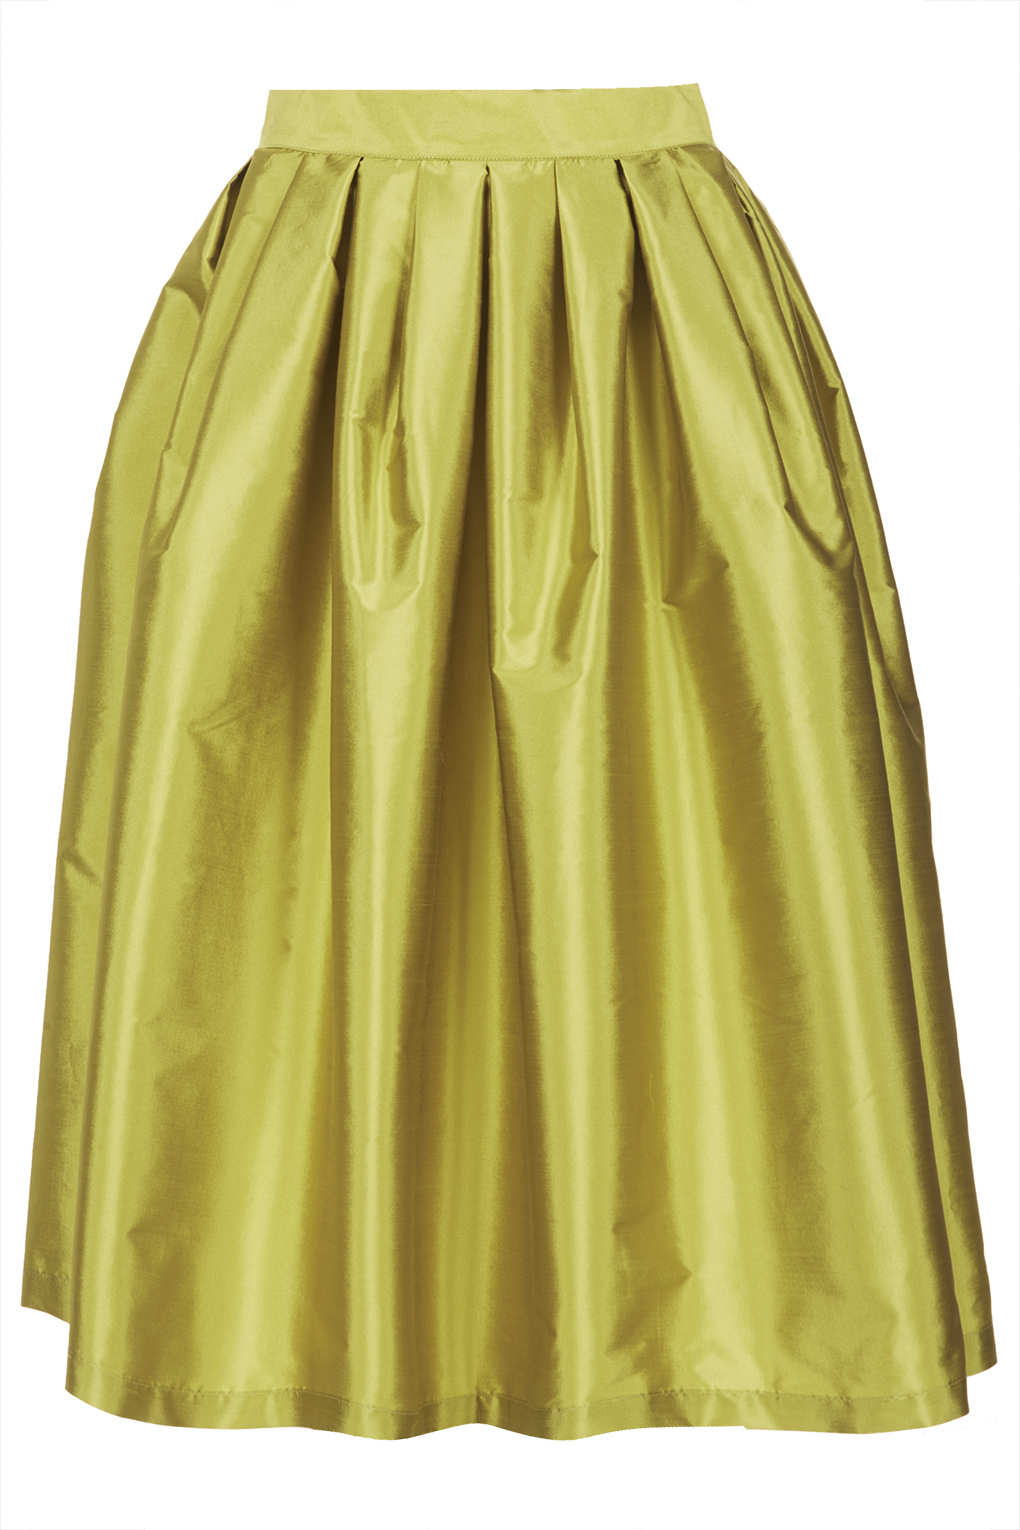 Topshop Taffeta Midi Skirt in Yellow | Lyst